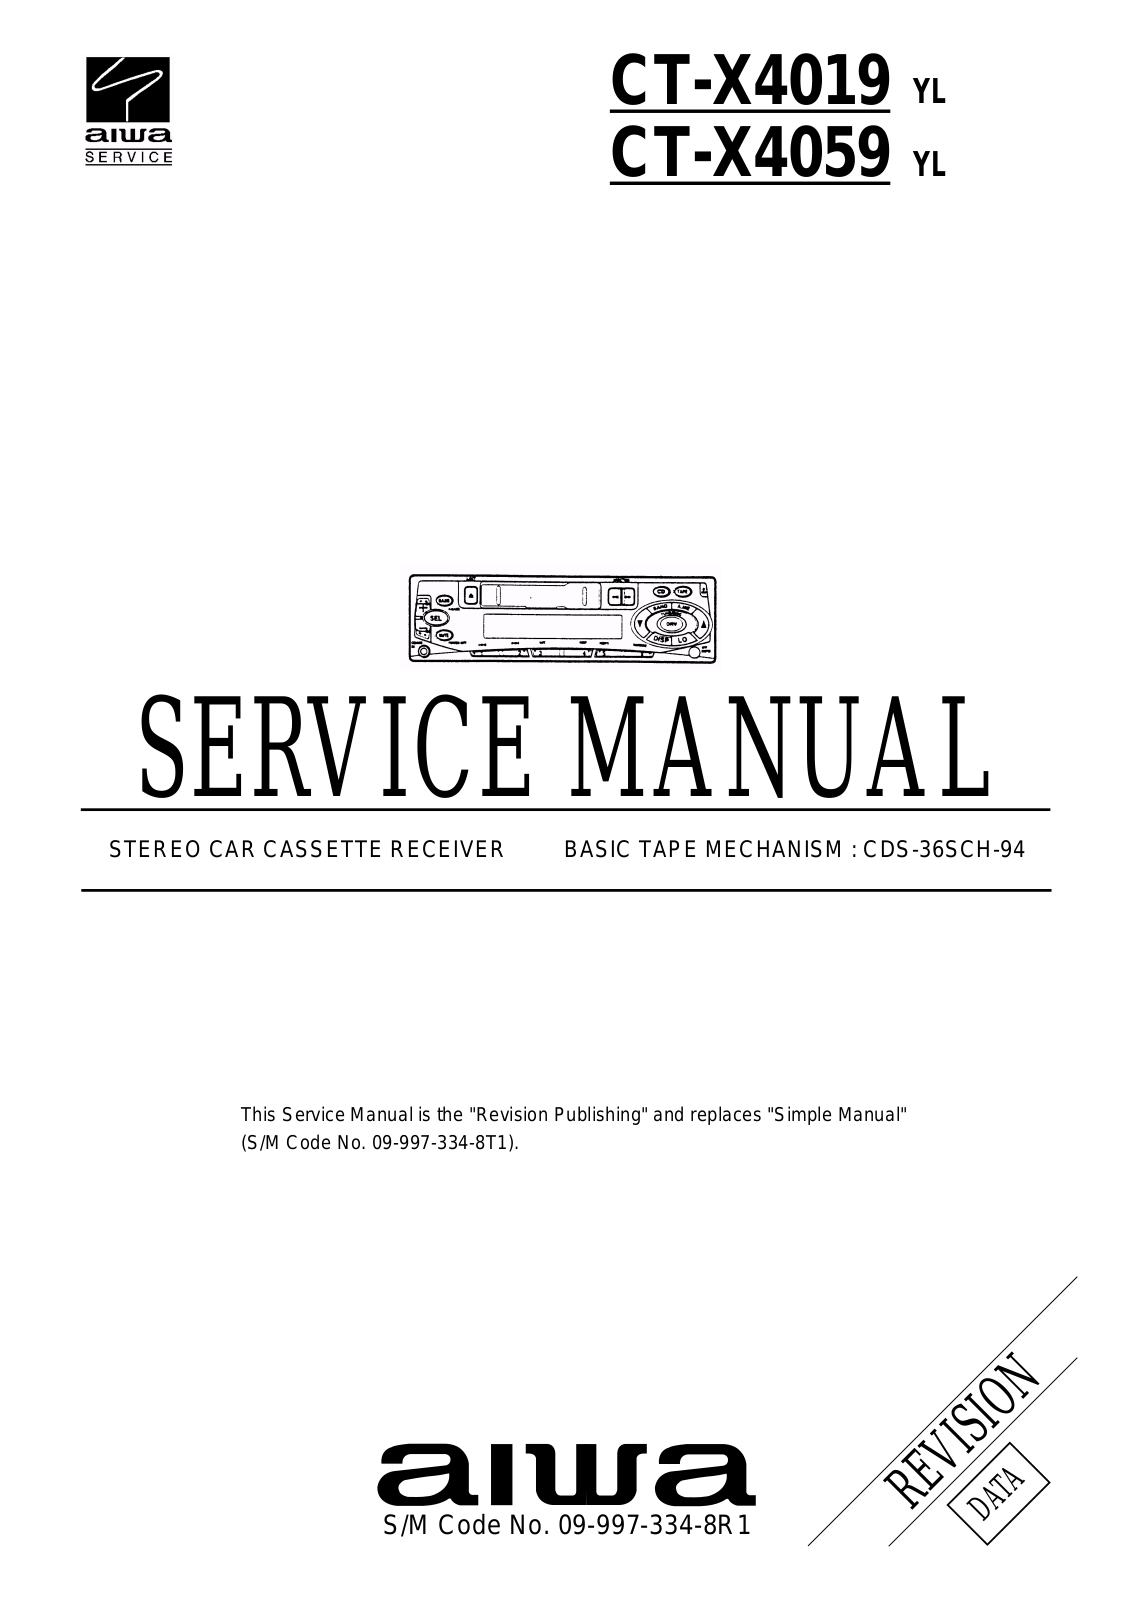 Aiwa CT-X4019, CT-X4059 Service Manual